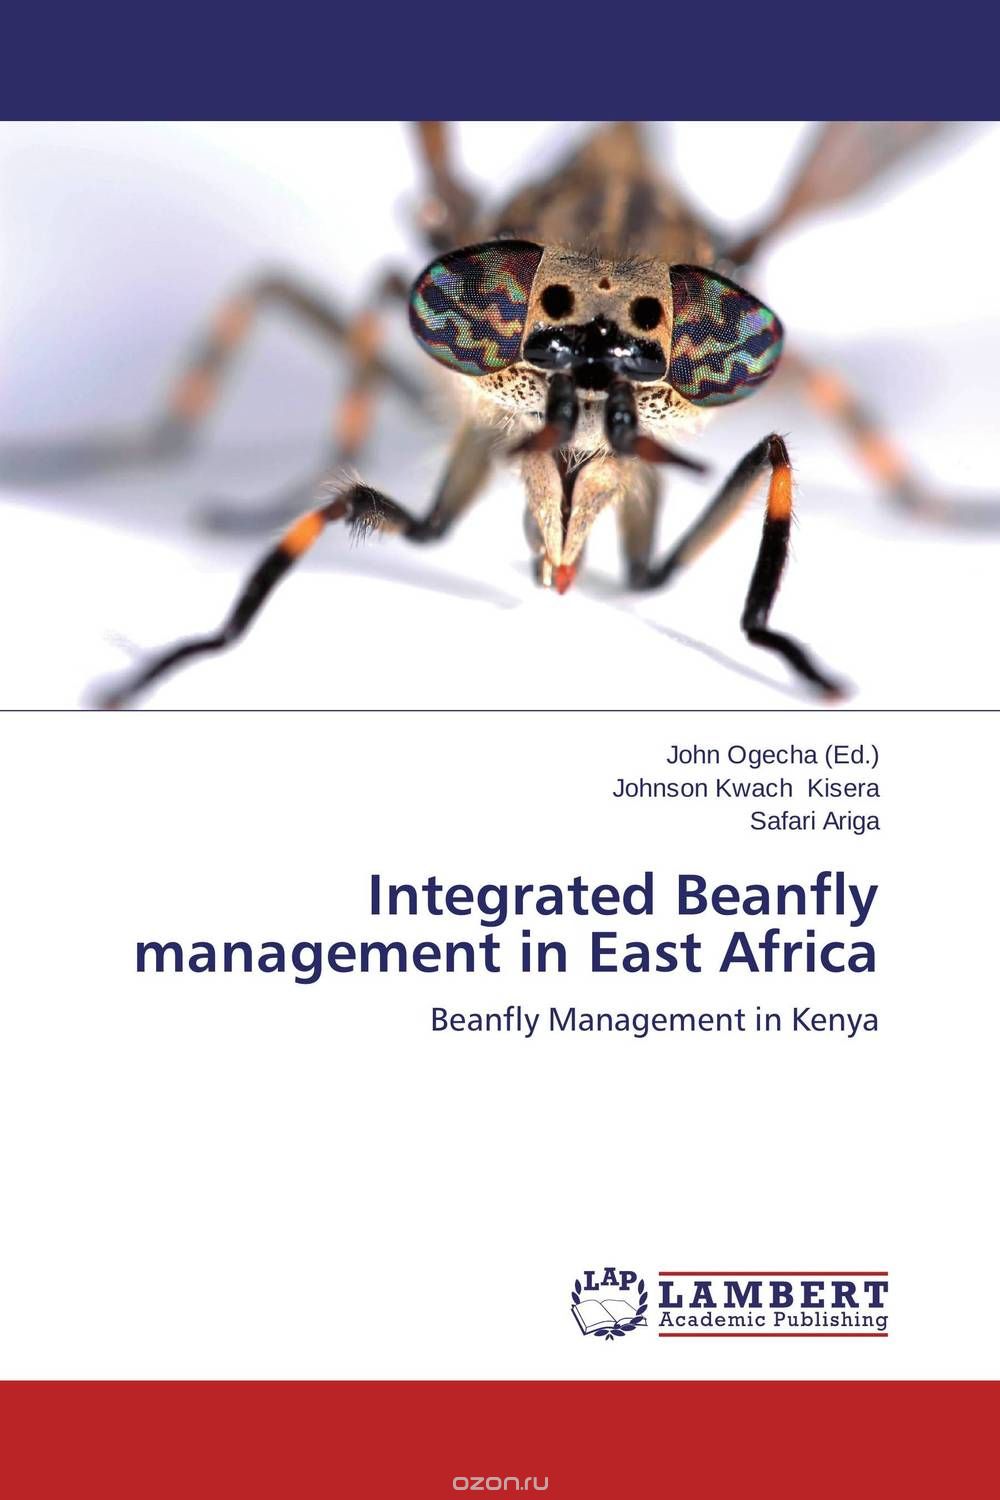 Скачать книгу "Integrated Beanfly management in East Africa"